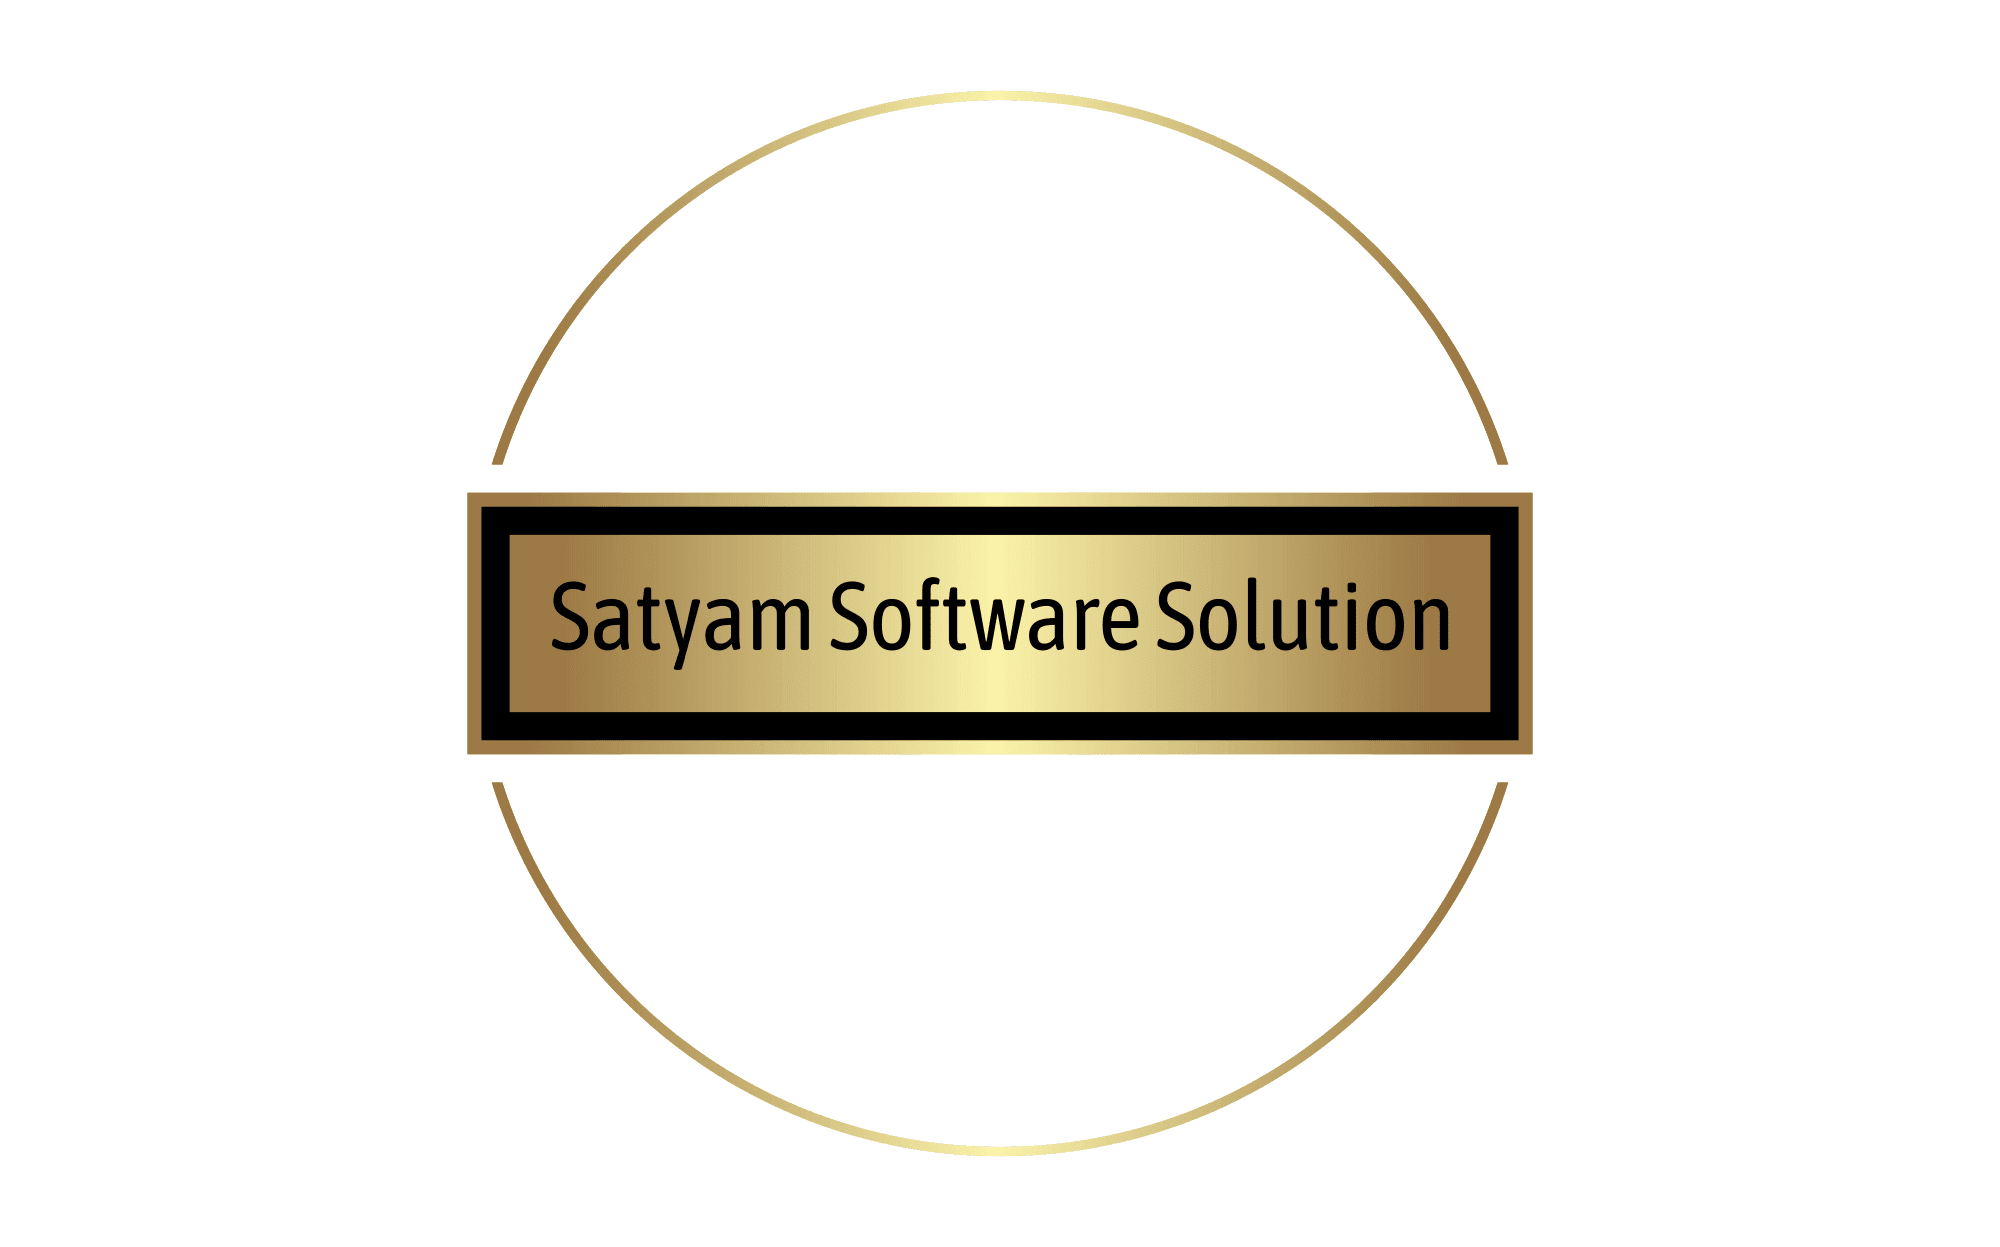 Satyam Software Solution